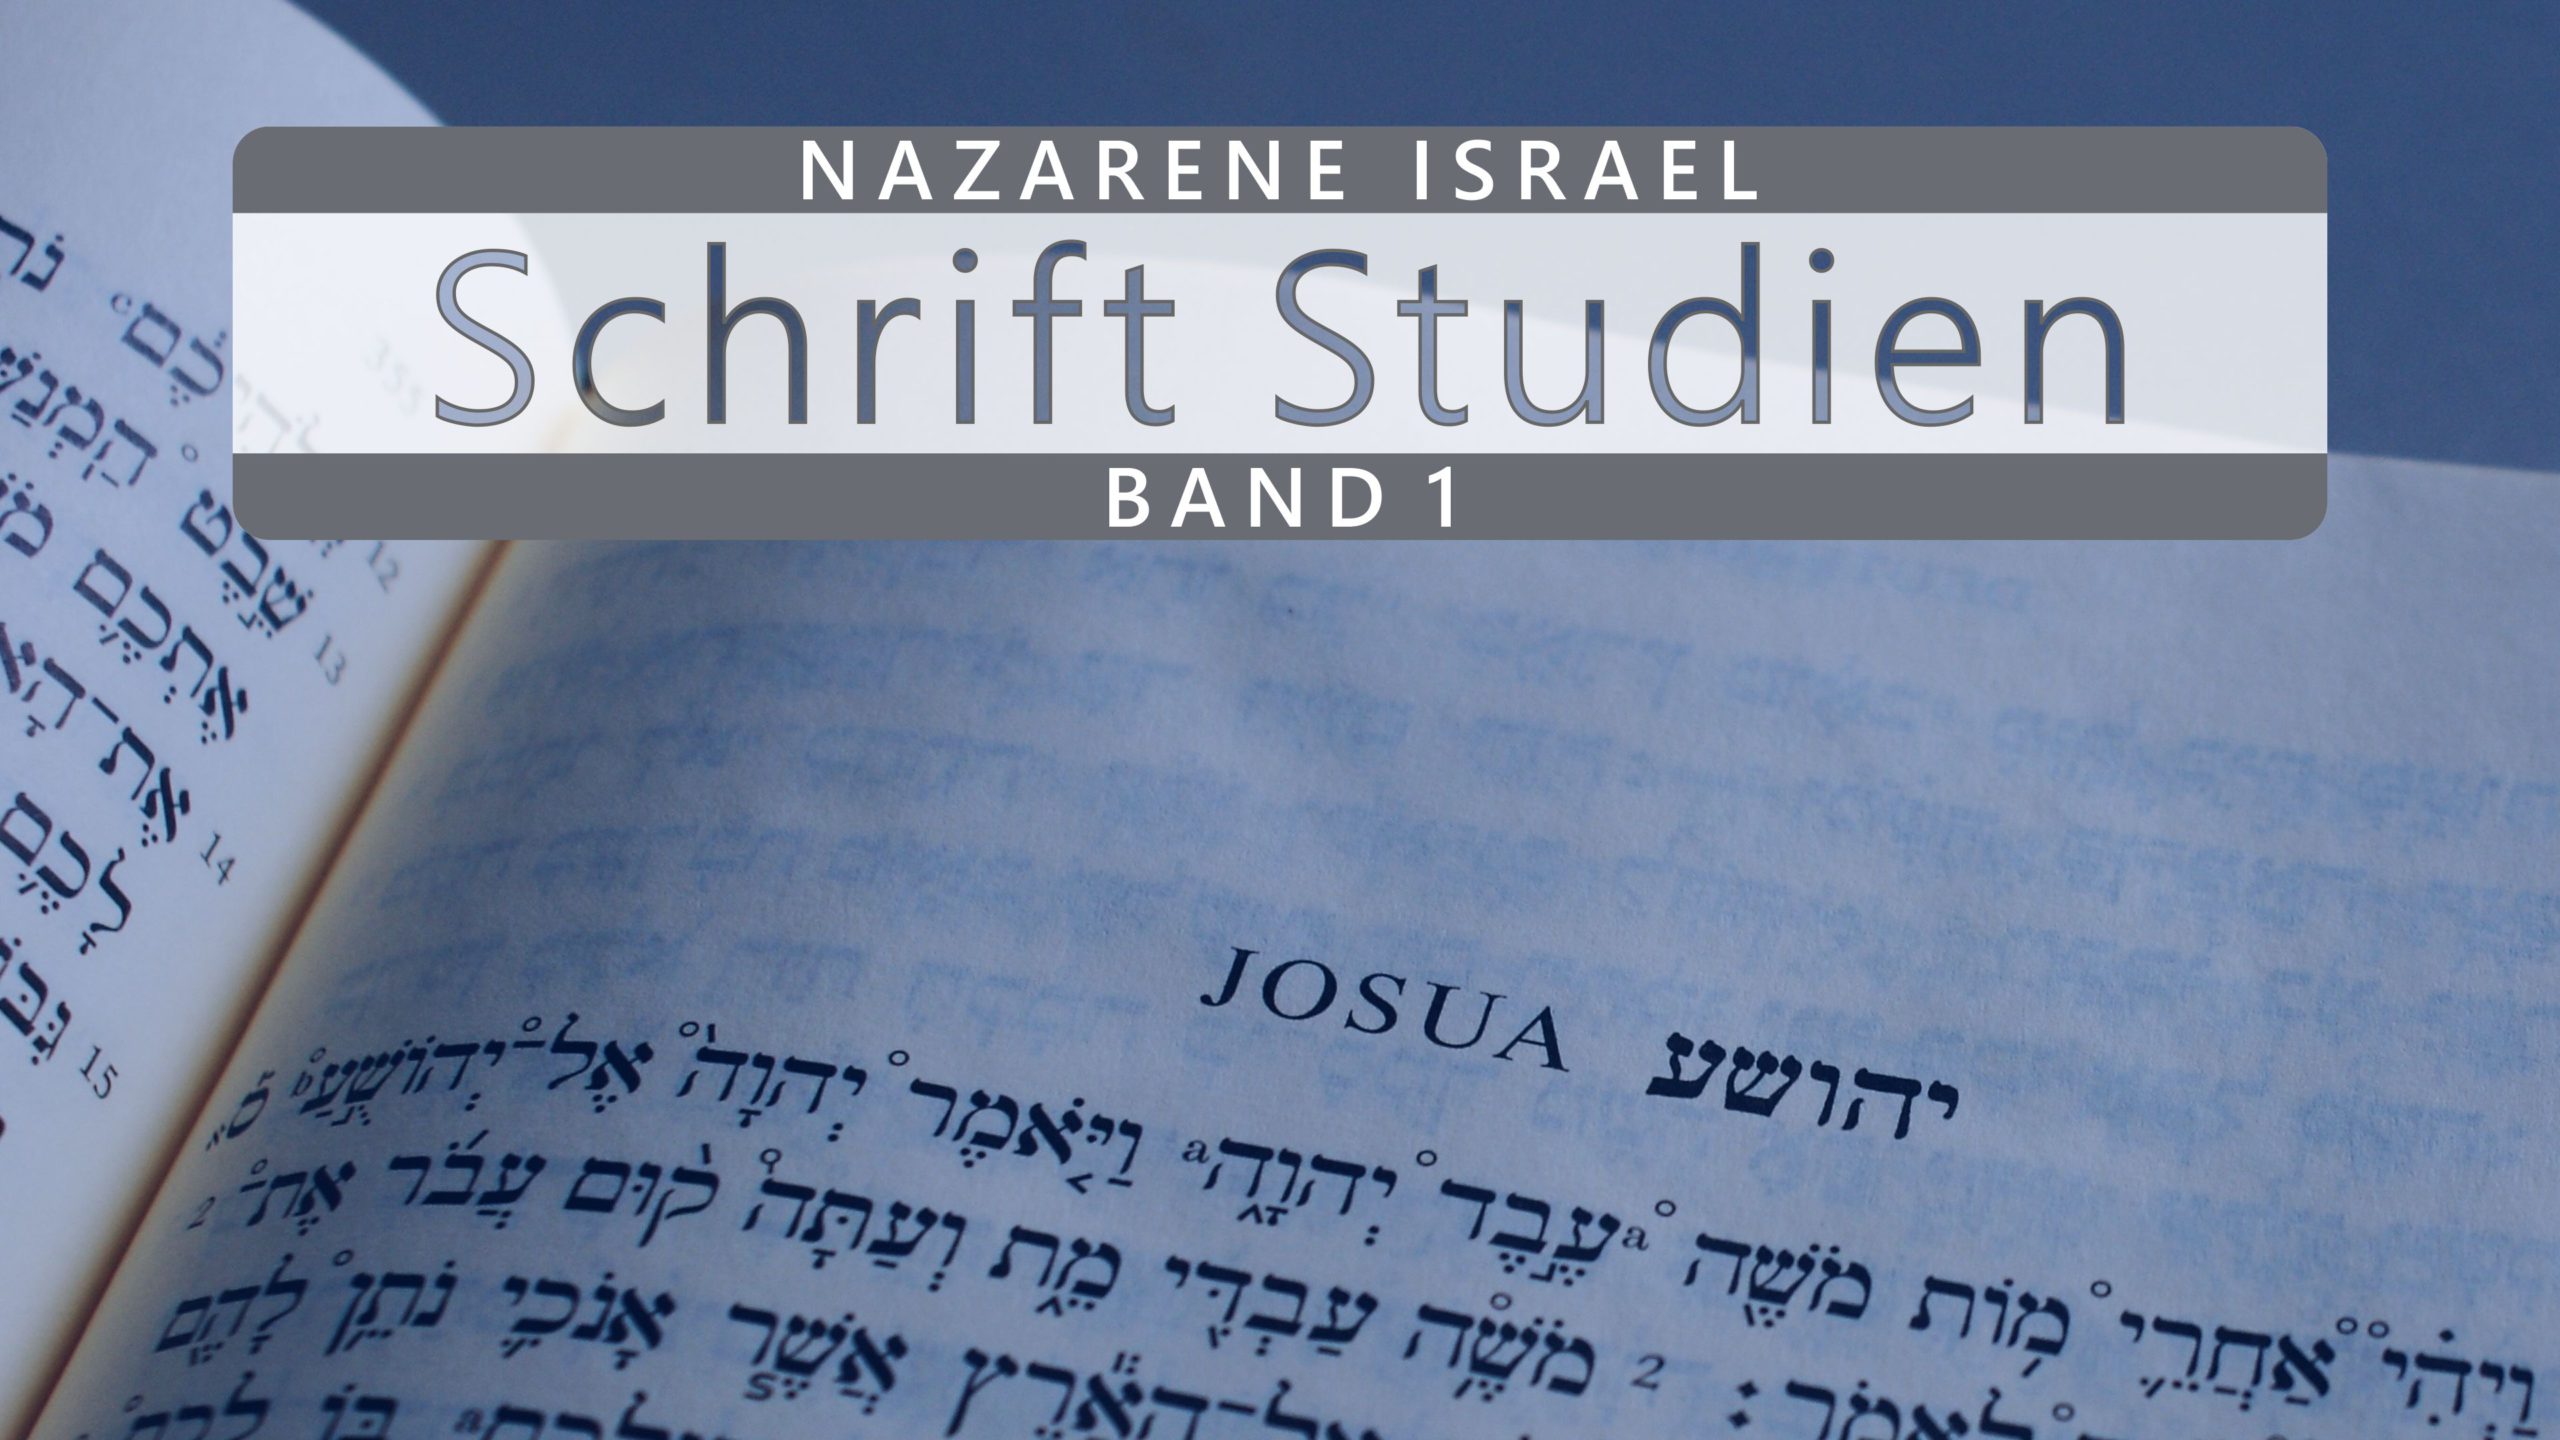 Nazarene Schrift Studien Band 1